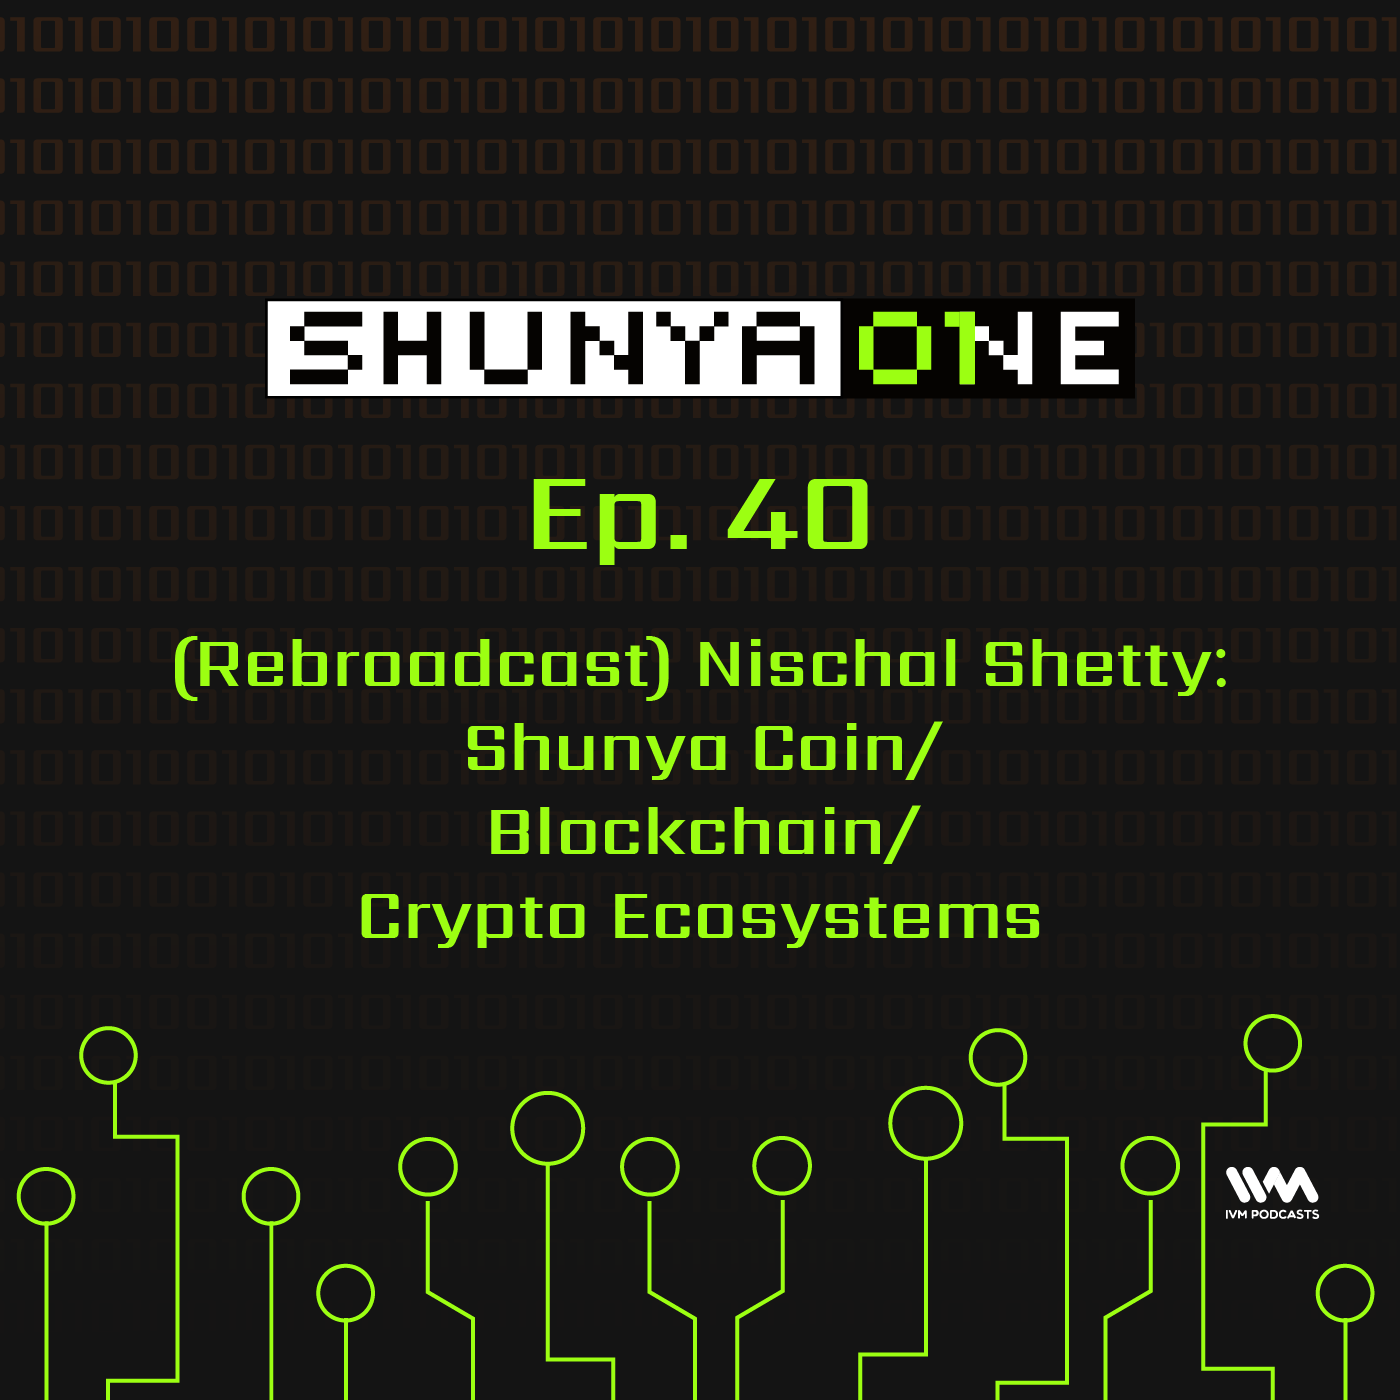 (Rebroadcast) Nischal Shetty: Shunya Coin / Blockchain / Crypto Ecosystems